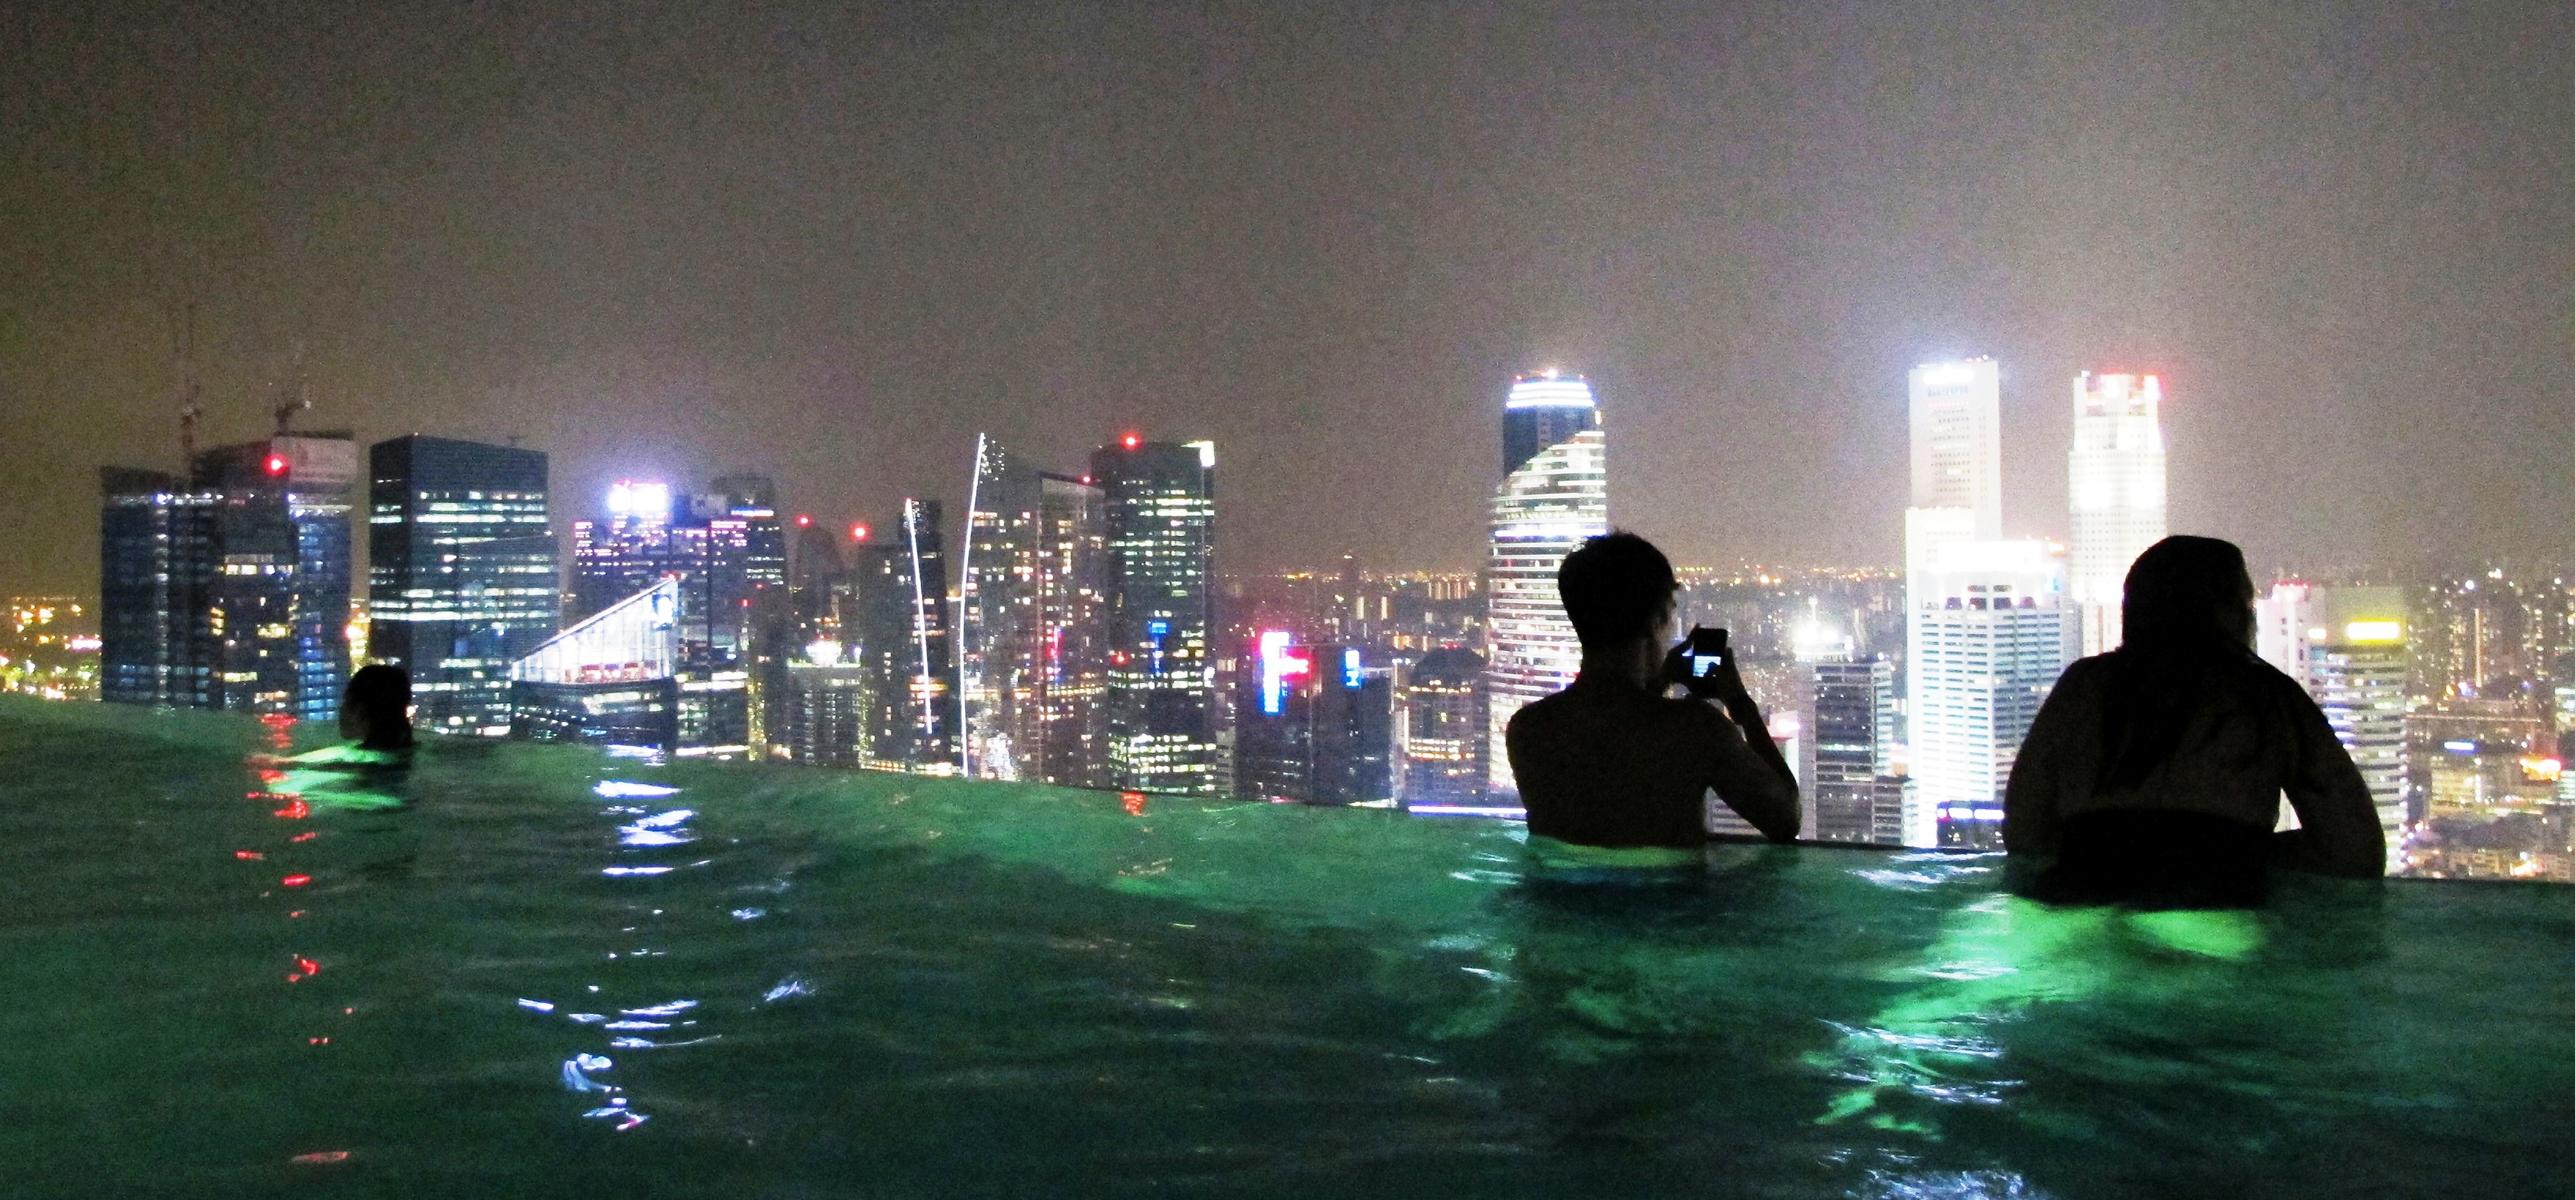 Singapur: Hotel Marina Bay Sands – Pool Position beim Nacht-GP